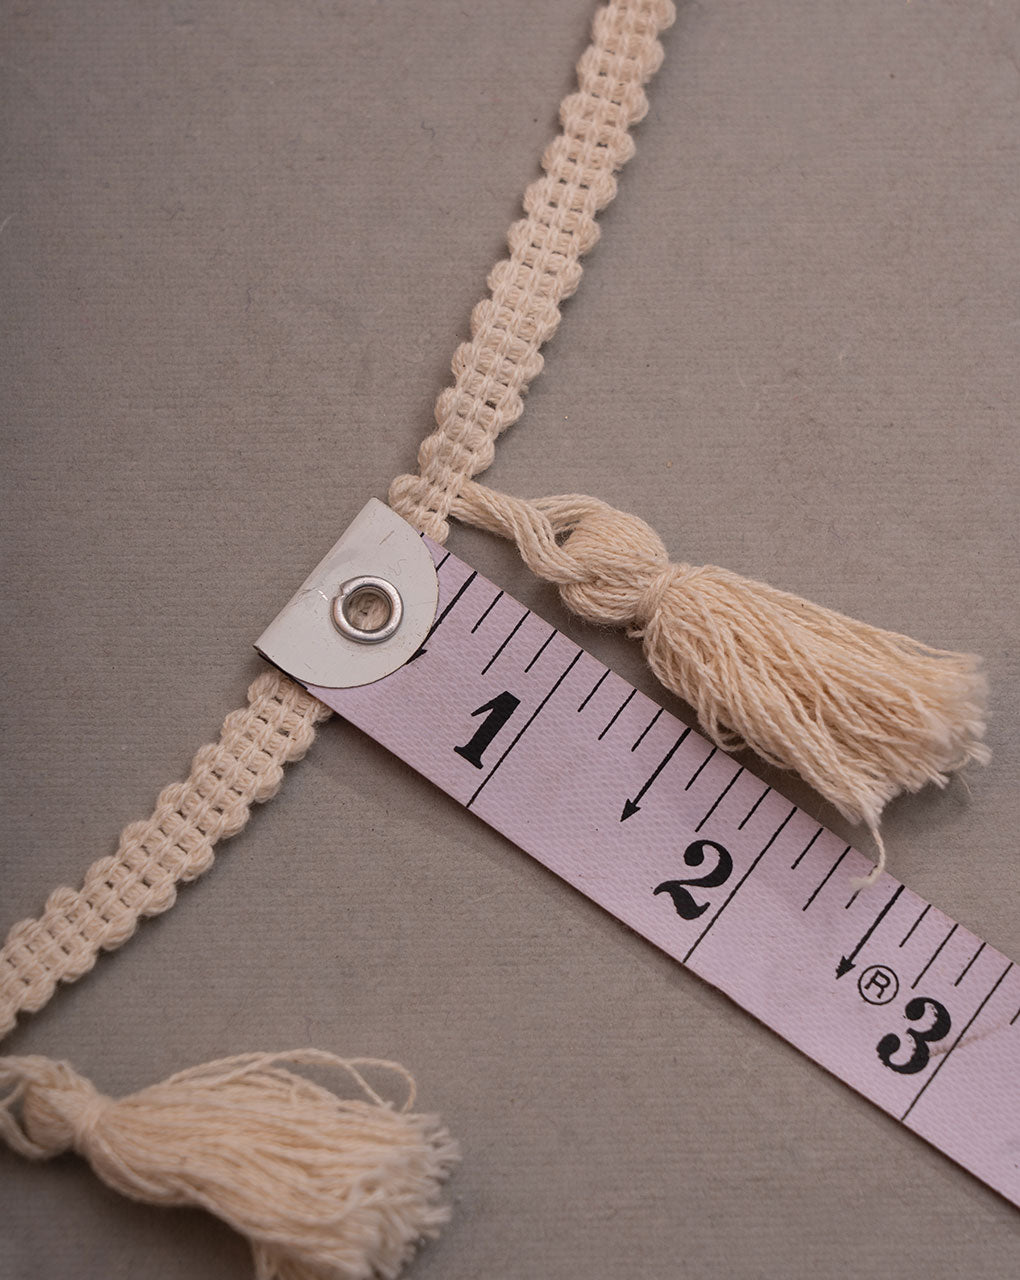 Dyeable Crochet Cotton Tassel Lace - Fabriclore.com